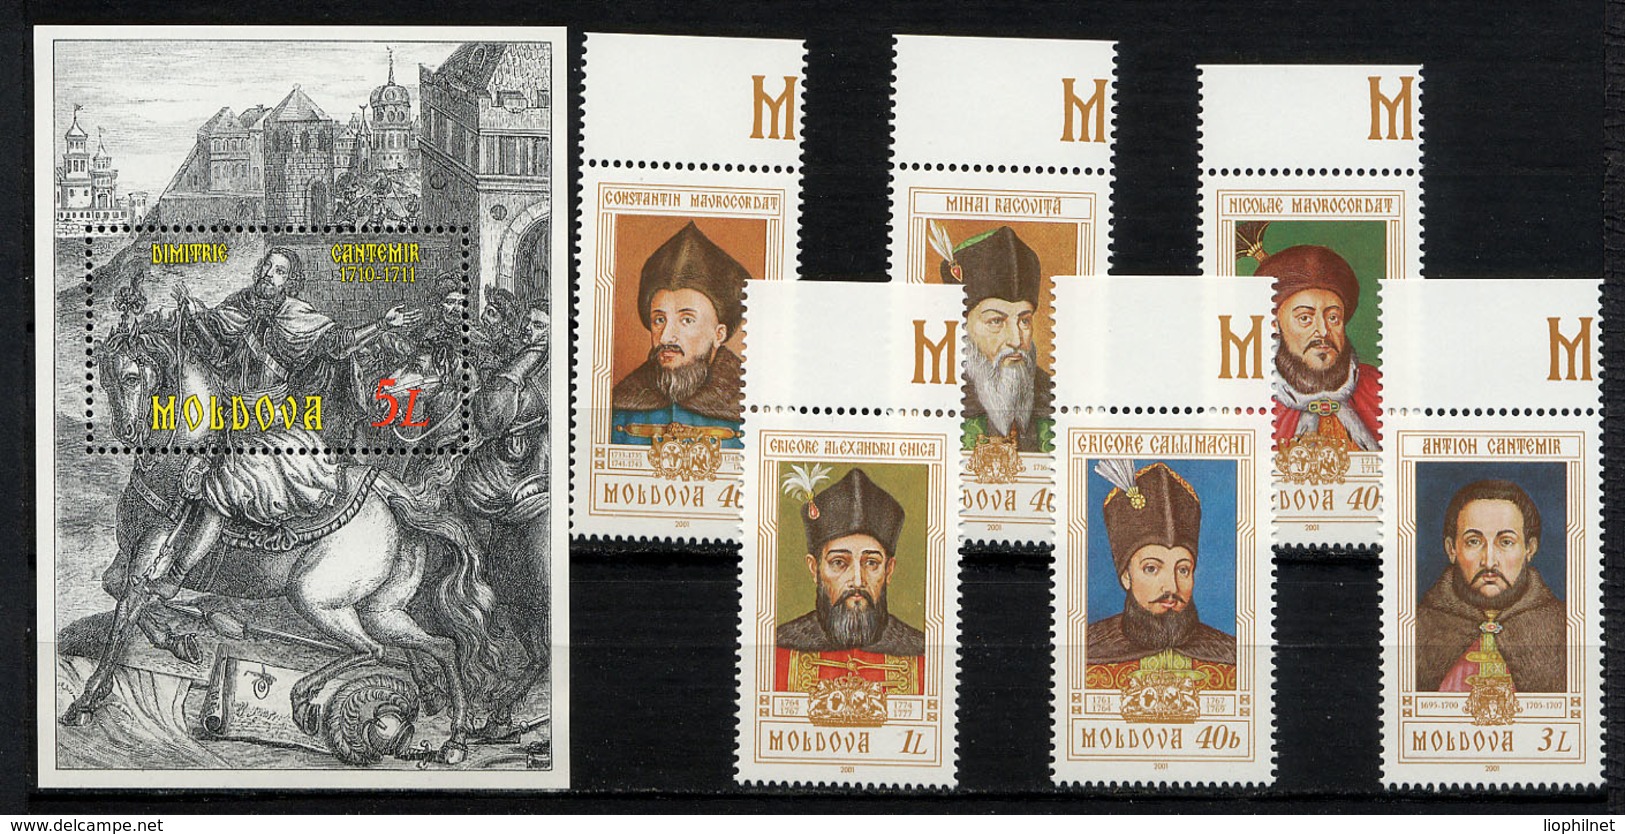 MOLDAVIE MOLDOVA 2003, SOUVERAINS, 6 Valeurs Et 1 Bloc, Neufs / Mint. R1431 - Moldavie